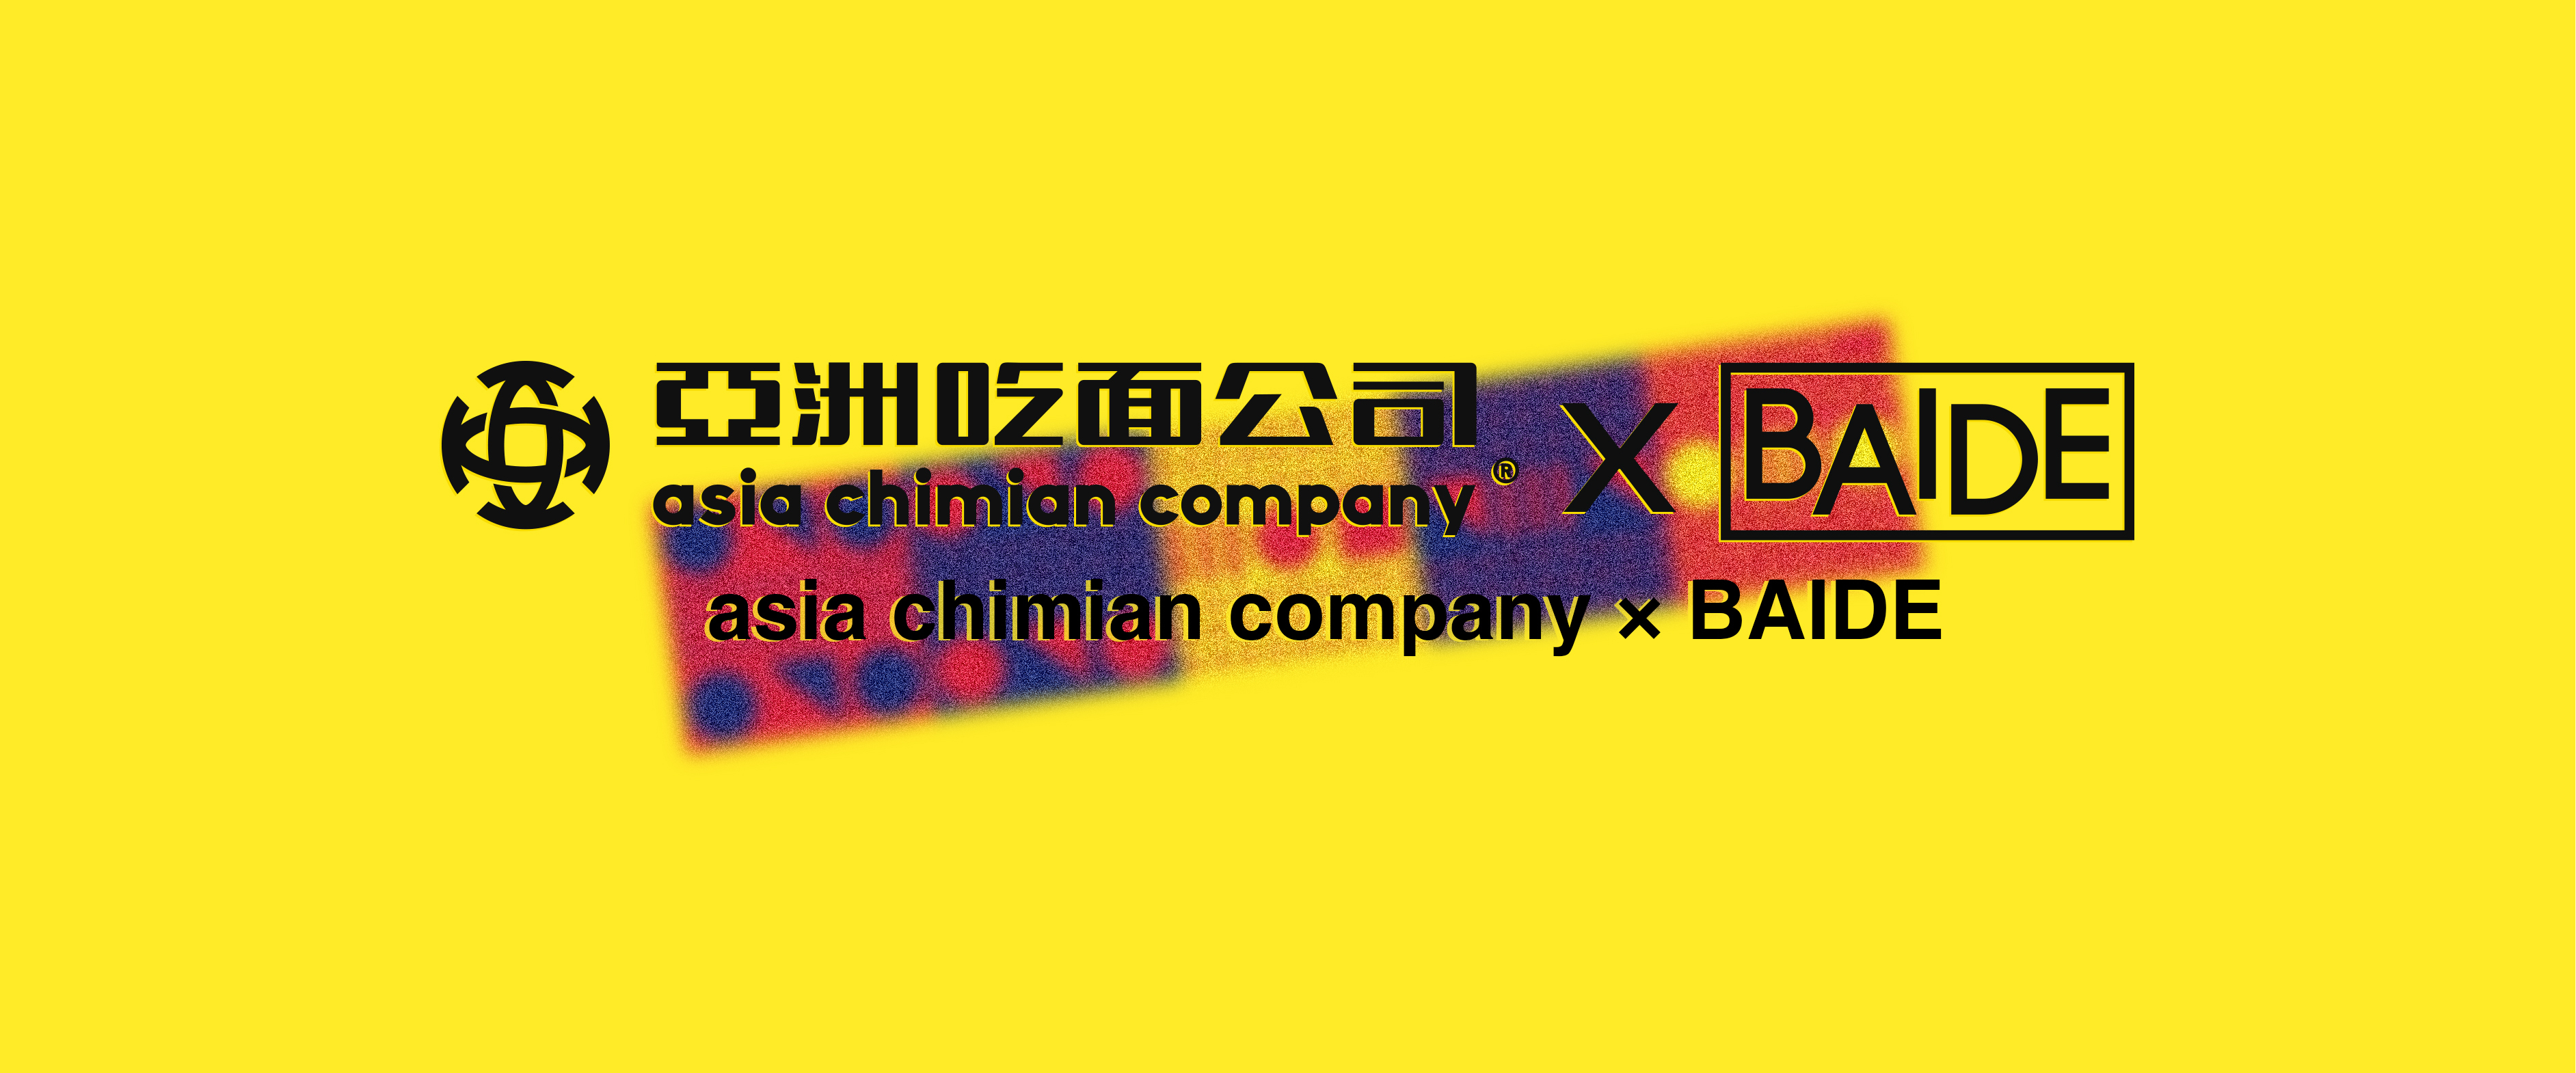 Asia chimian company × BAIDE